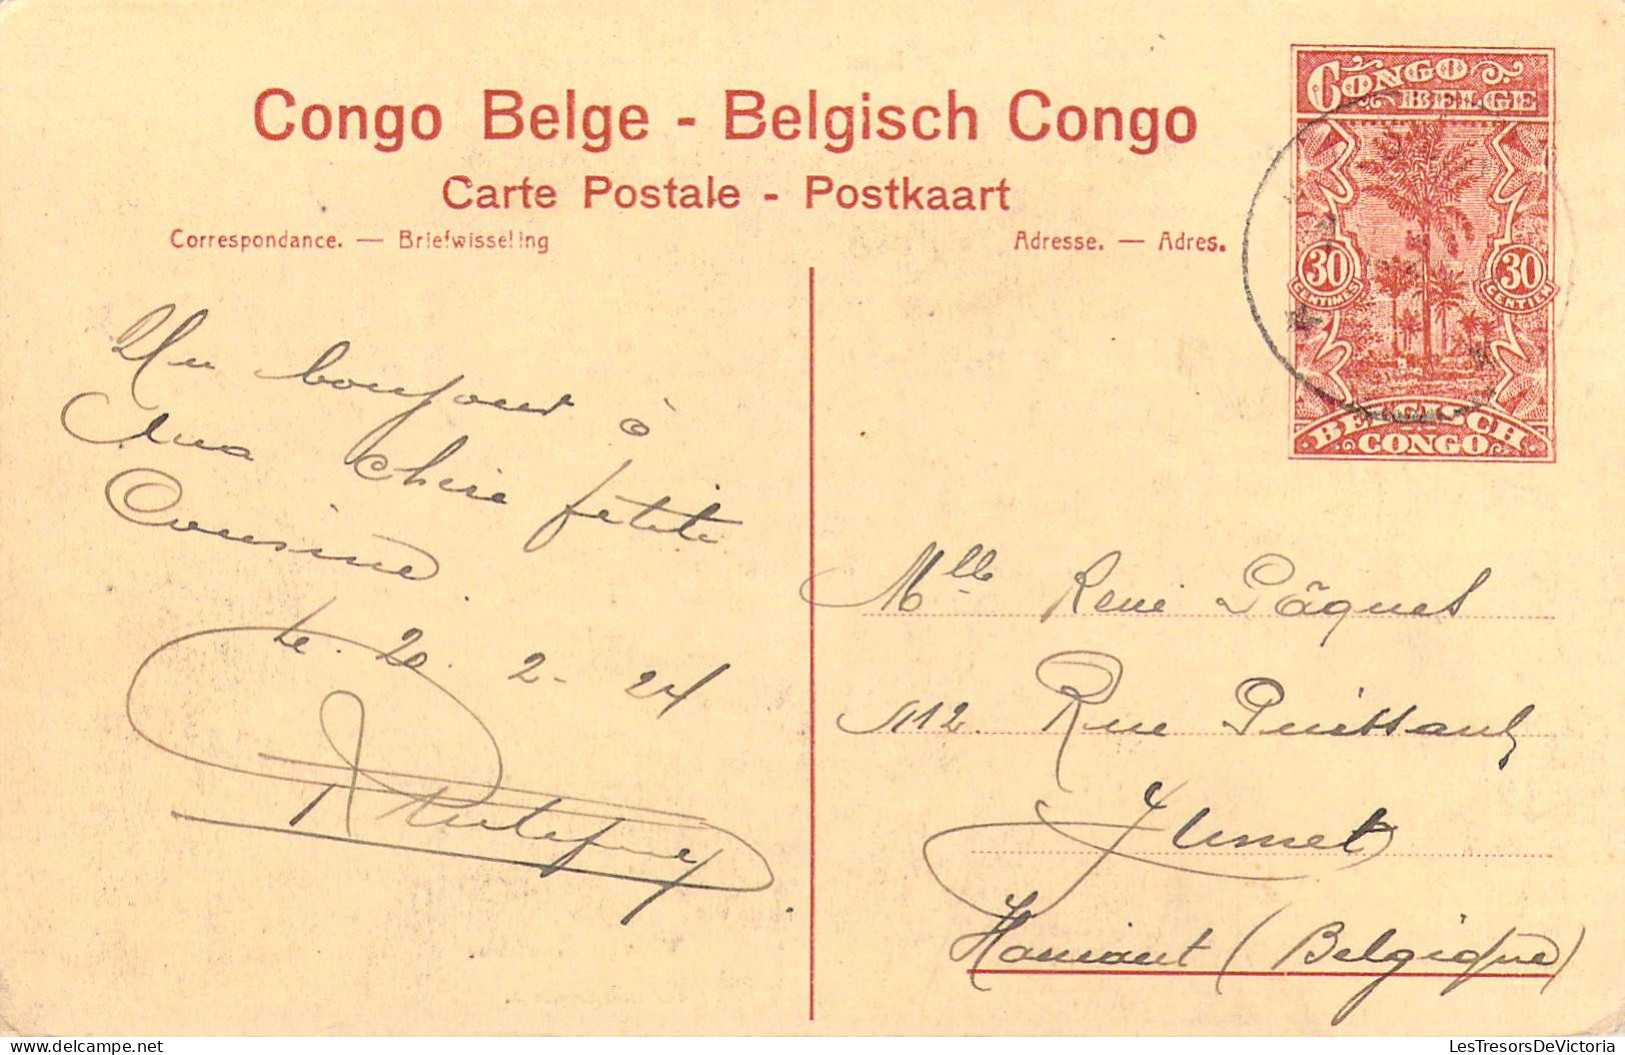 CONGO BELGE - Village Ababua - Carte Postale Ancienne - Belgian Congo